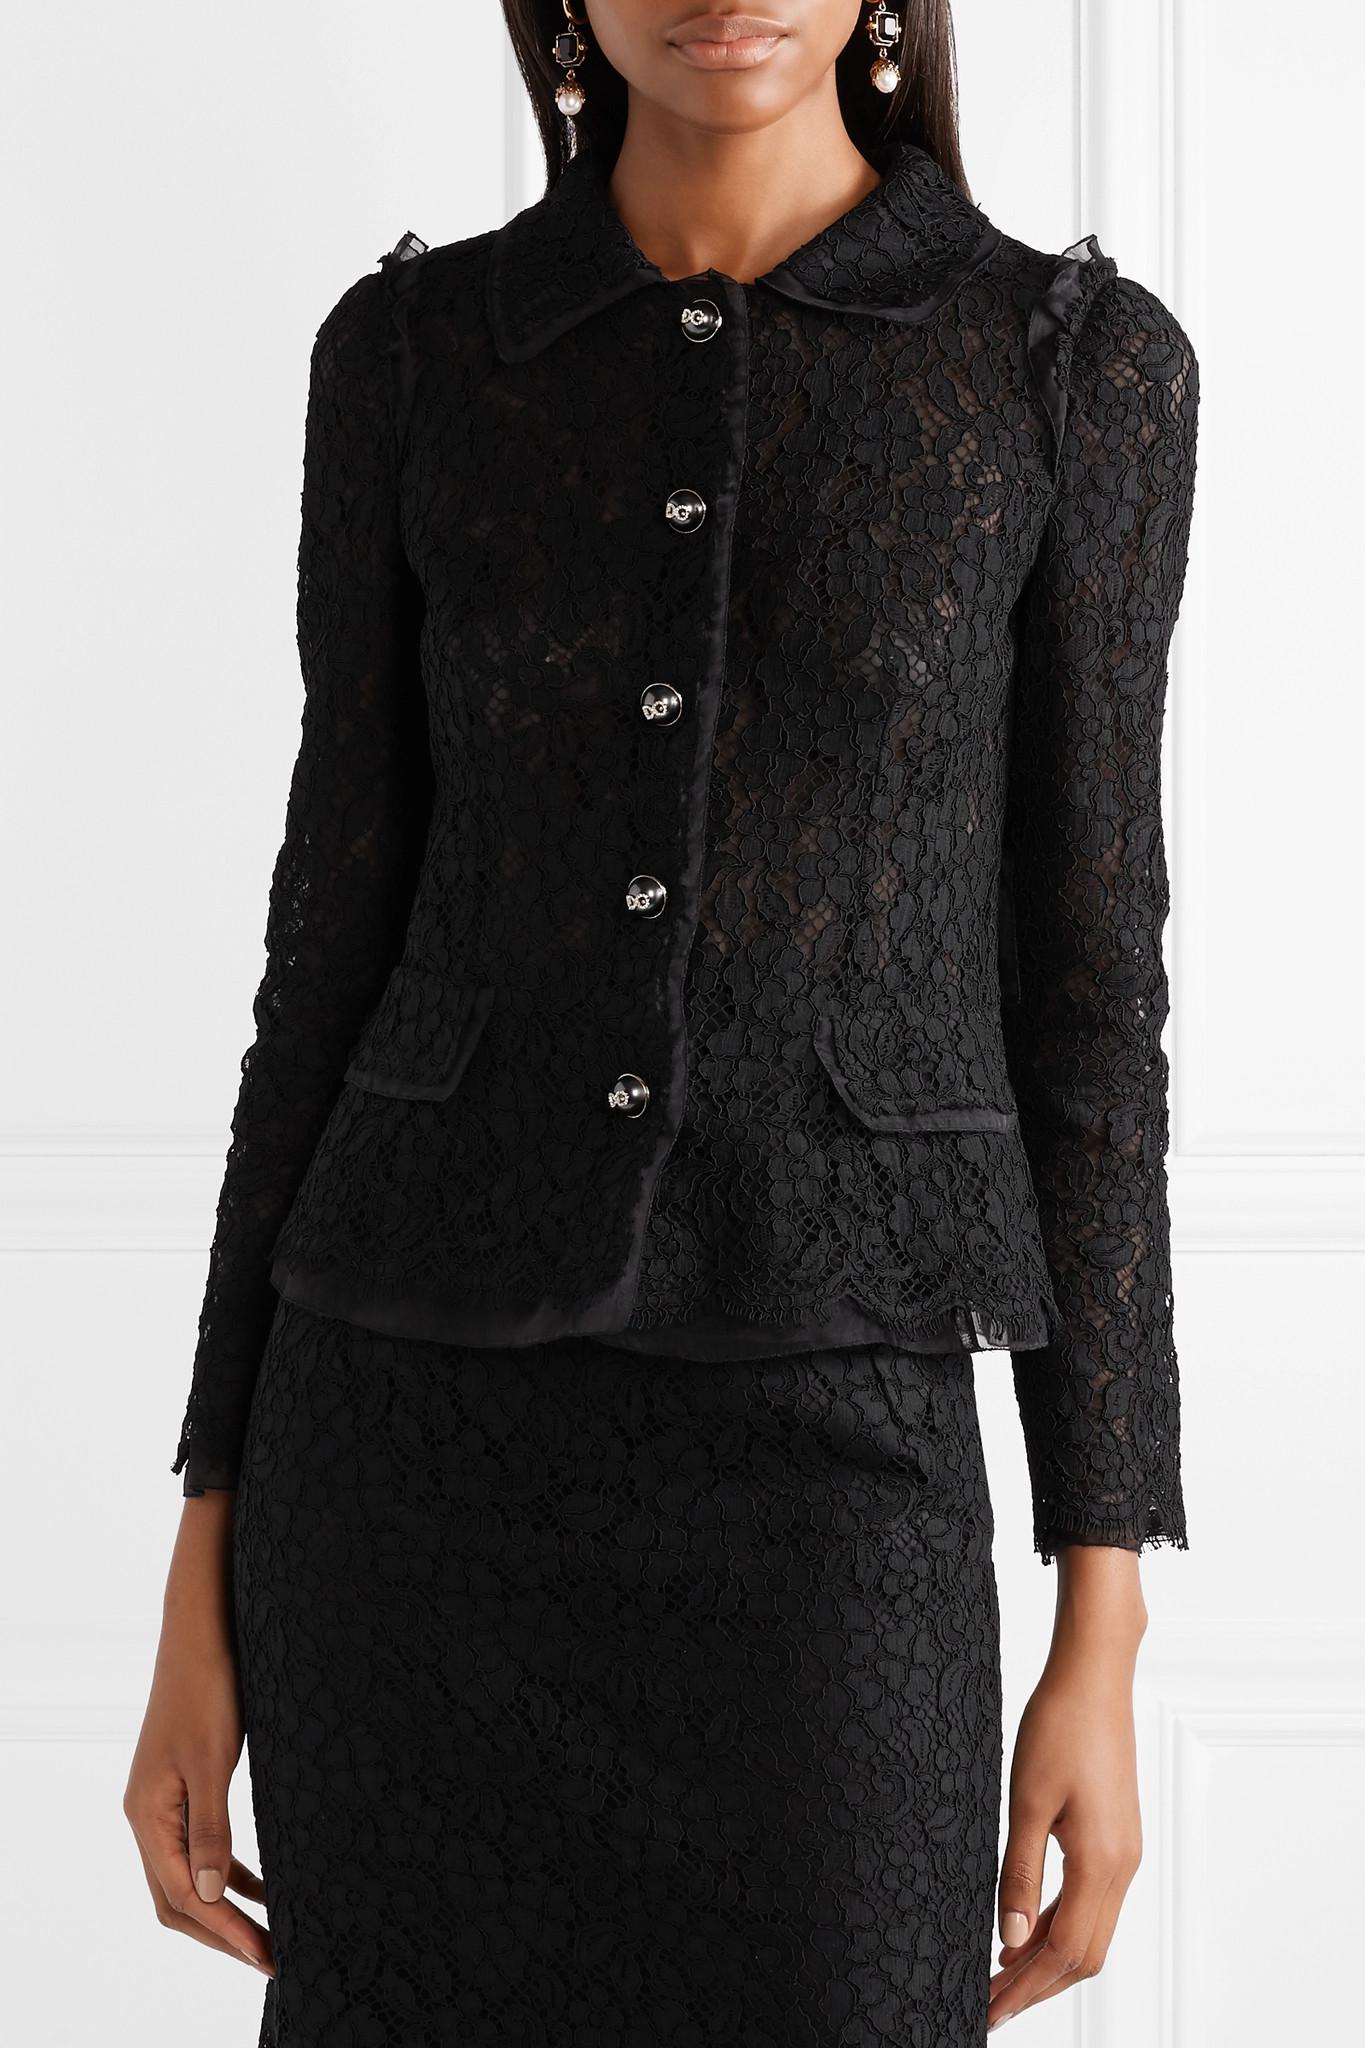 Dolce & Gabbana Cotton-blend Guipure Lace Jacket in Black - Lyst